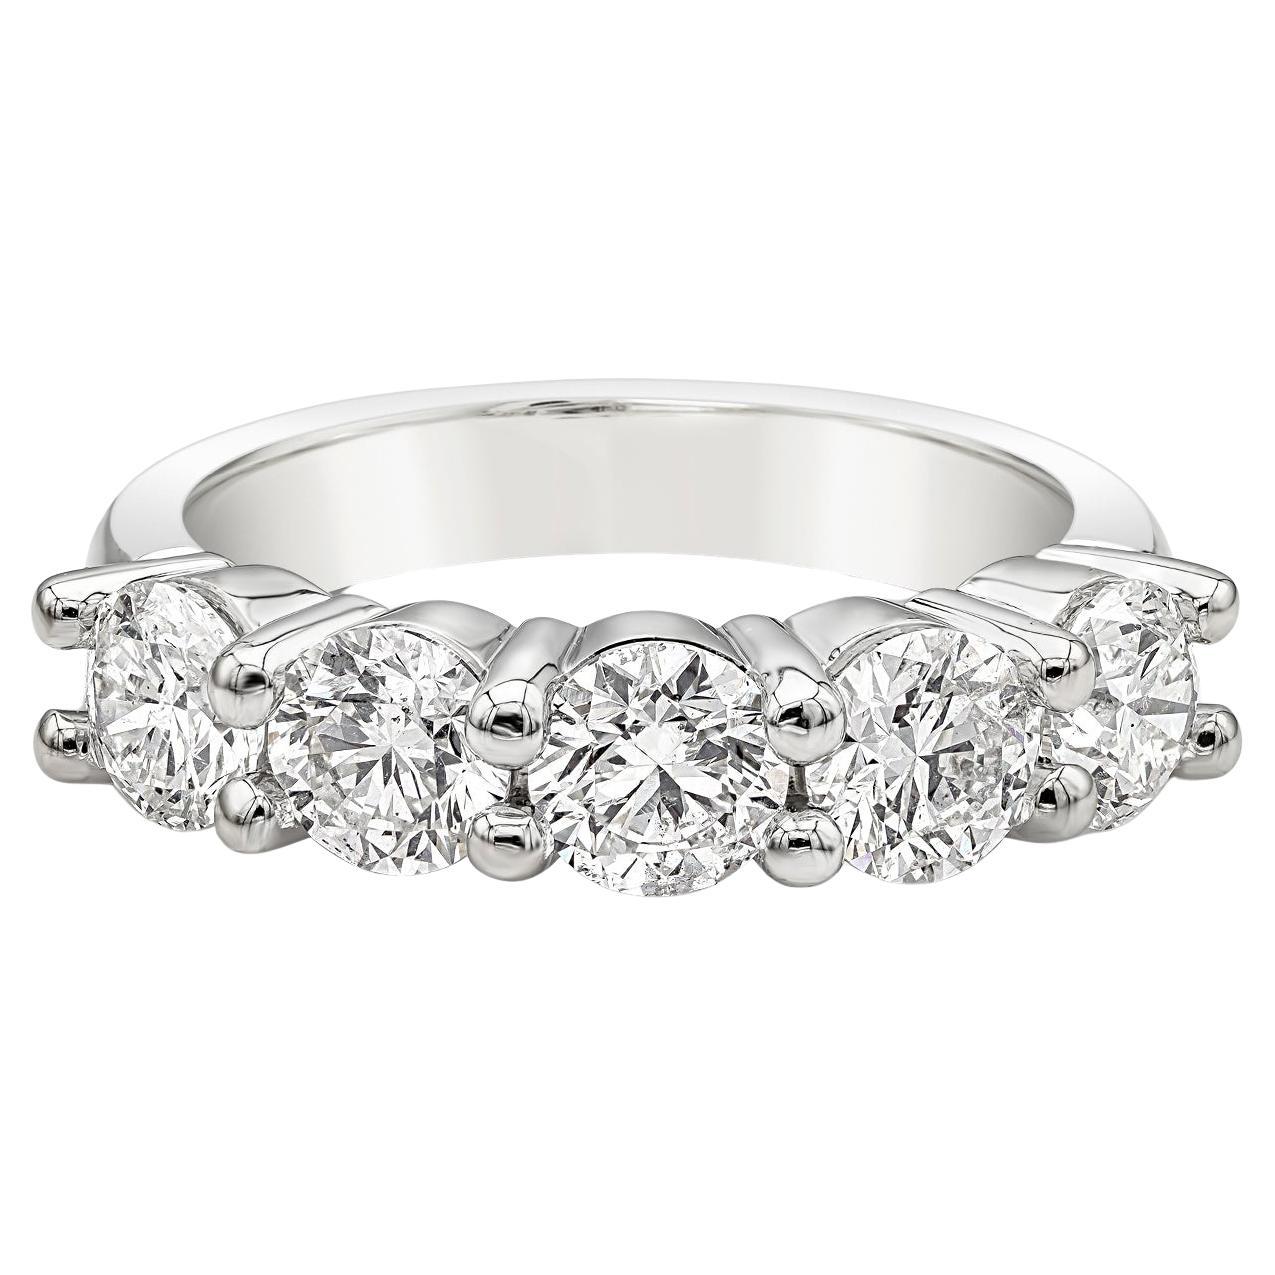 Roman Malakov 2.03 Carats Total Round Diamond Five-Stone Wedding Band Ring